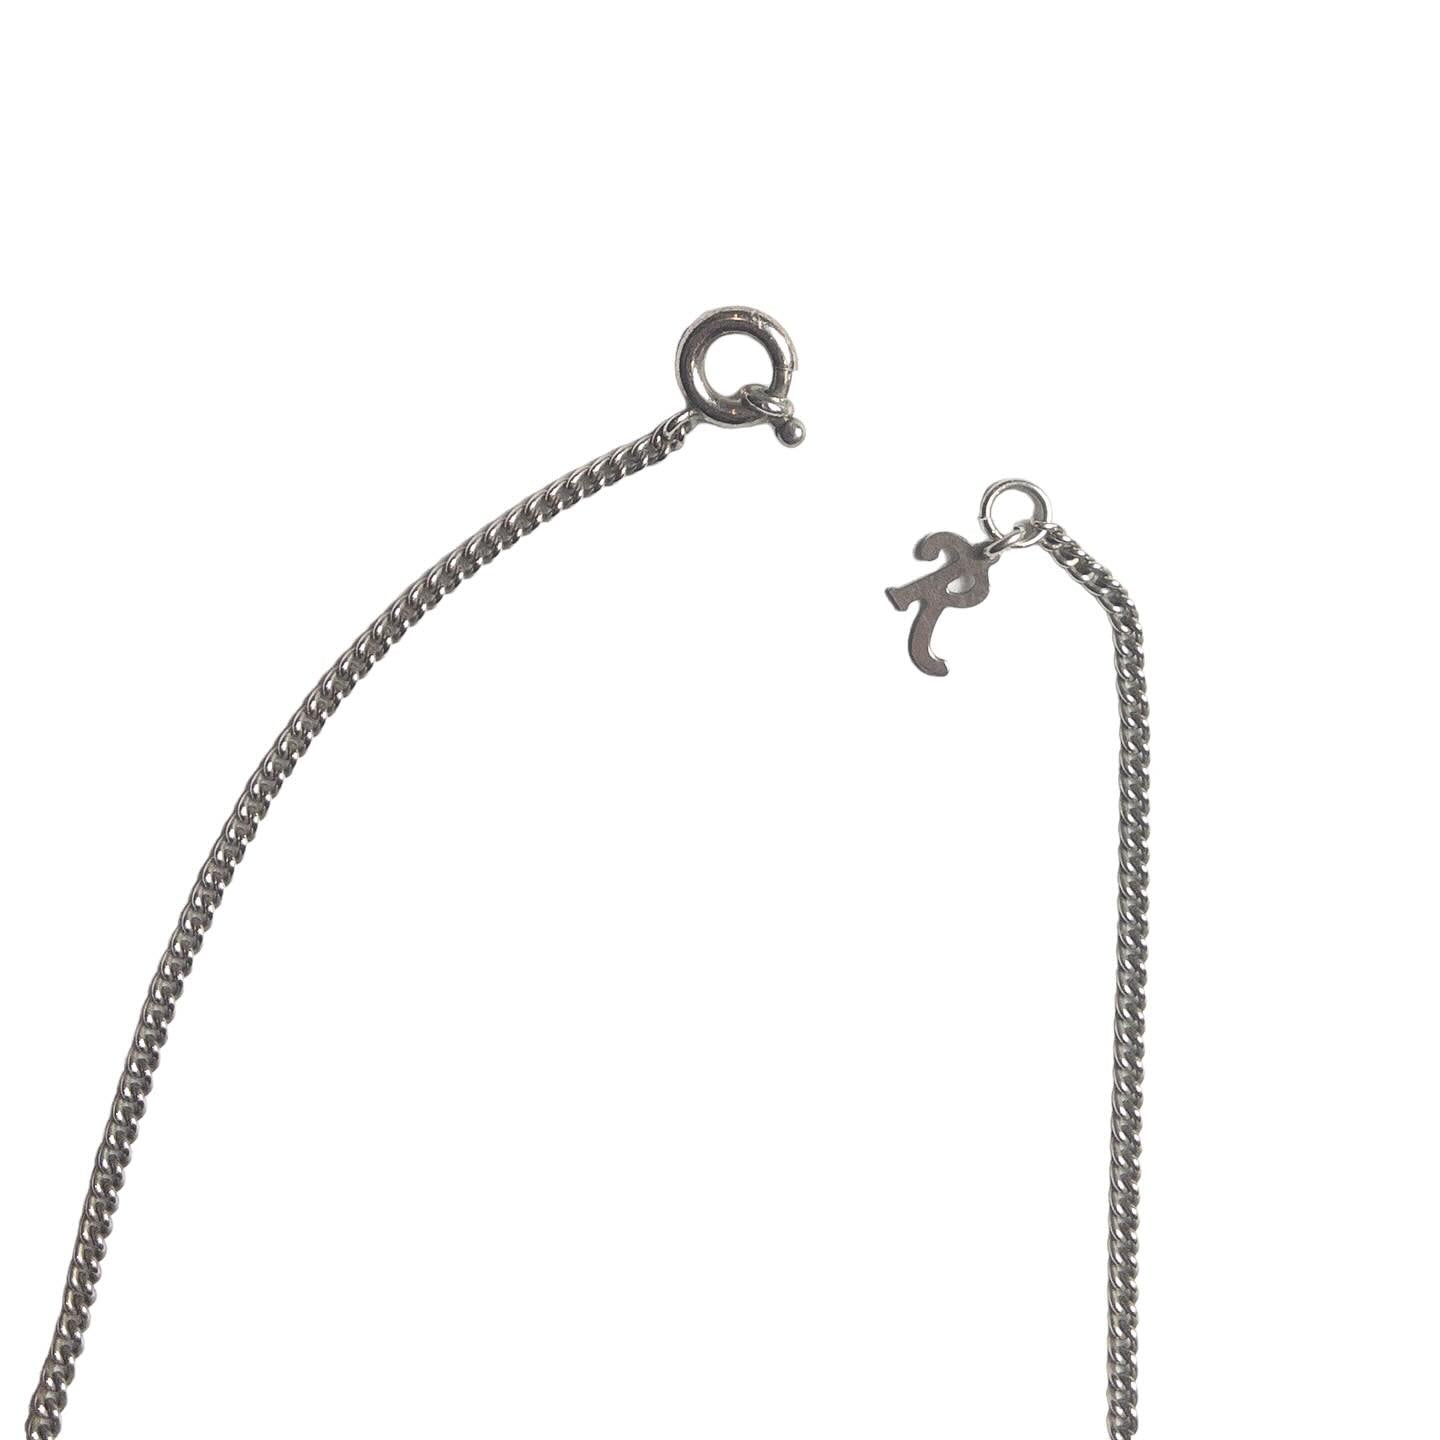 Raf Simons SS18 'Replicant' Necklace